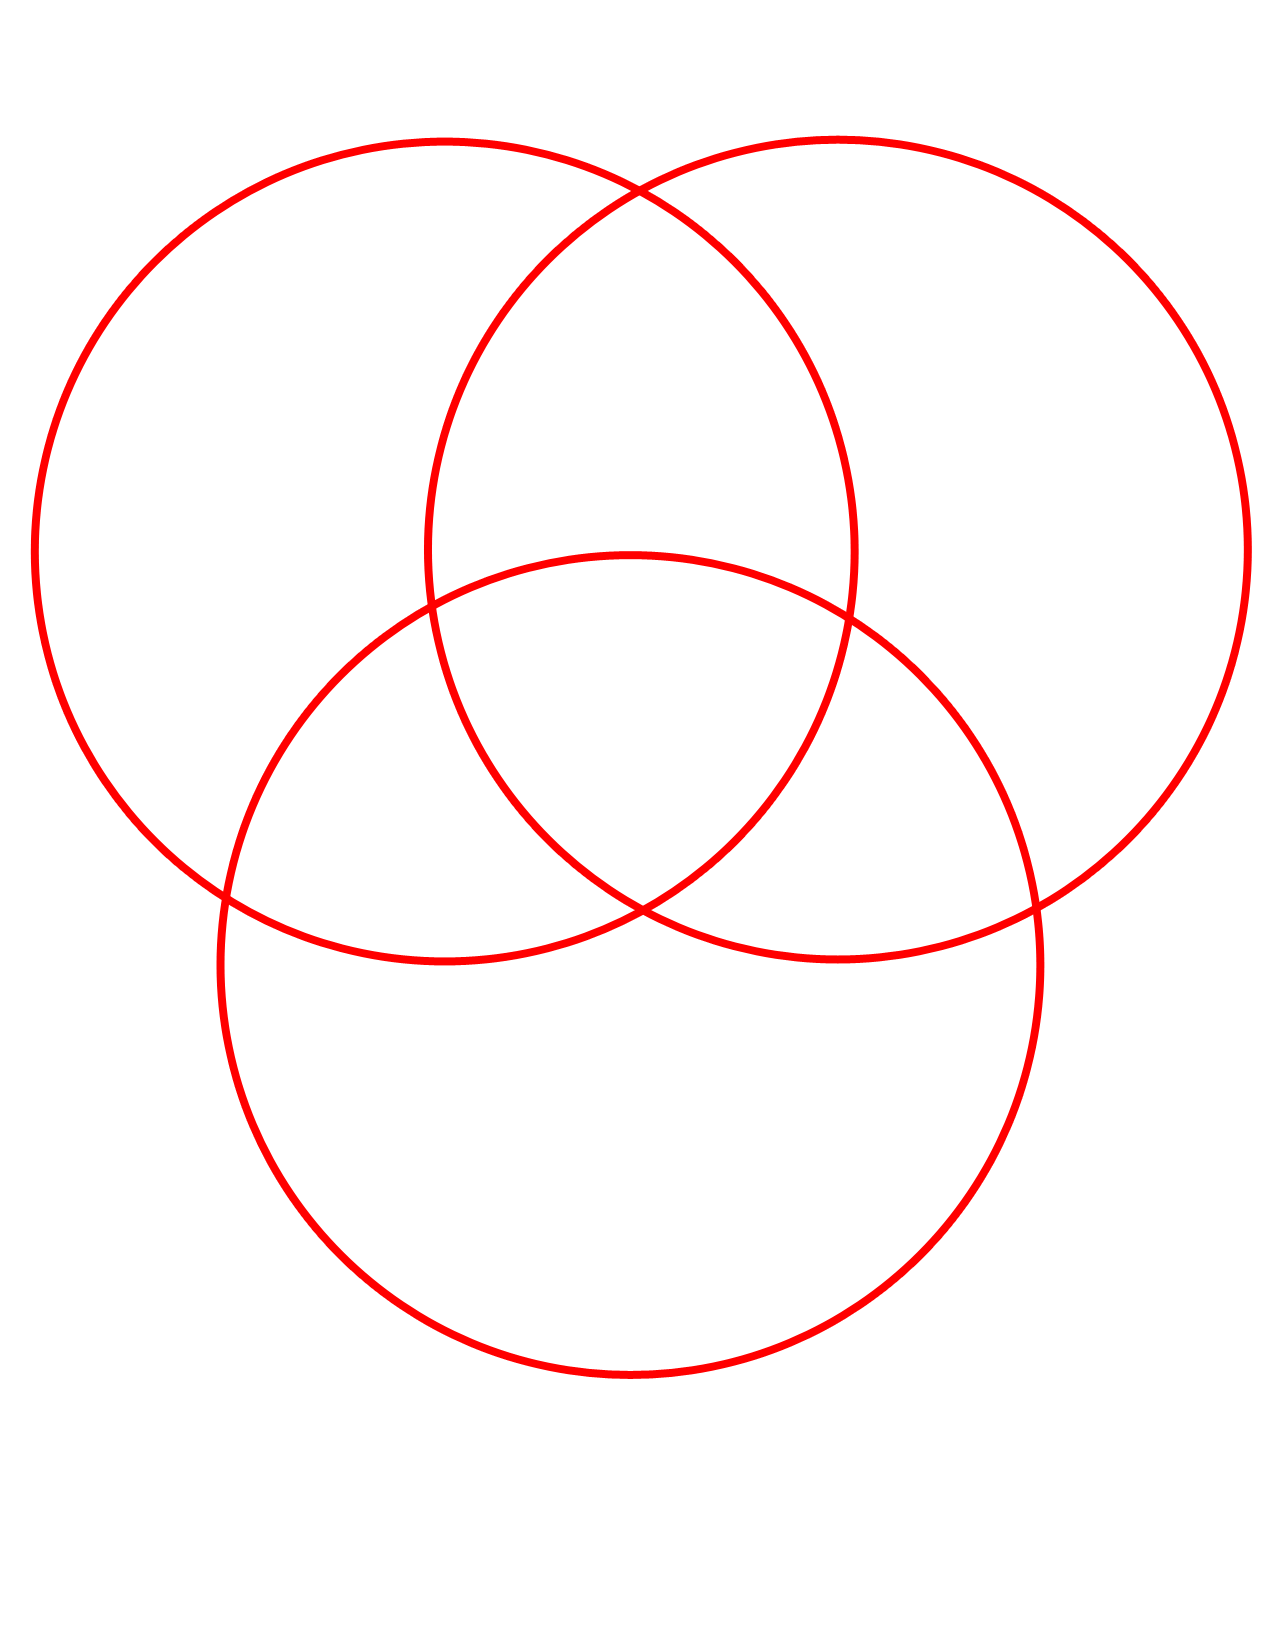 Blank Venn Diagram 3 Circles - ClipArt Best